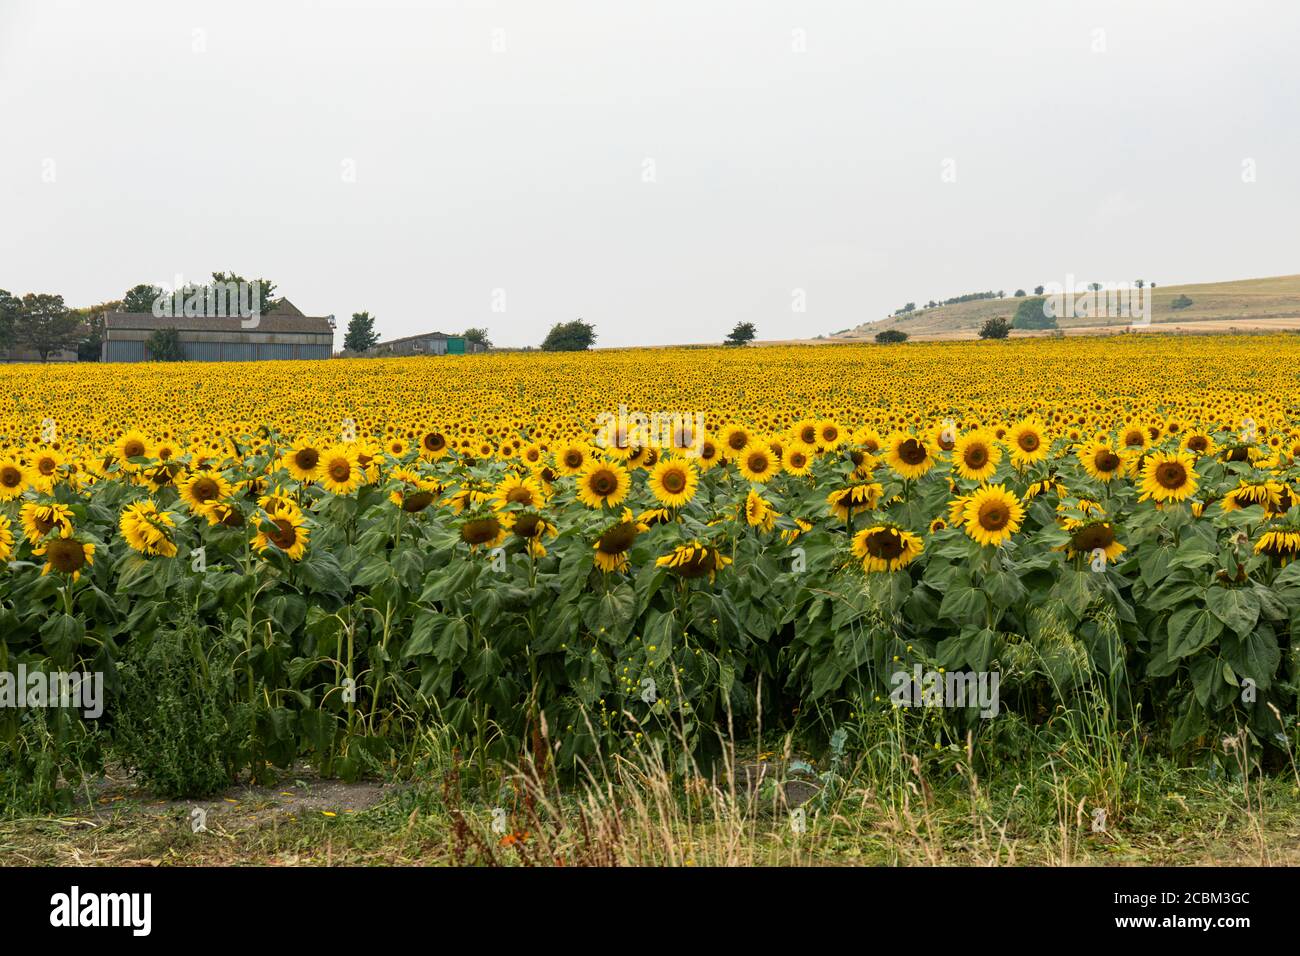 A Sunflower field full of bright sunflowers near Stanton St Bernard, Wiltshire.  Taken during a hot summer day with heat haze.  England, UK Stock Photo